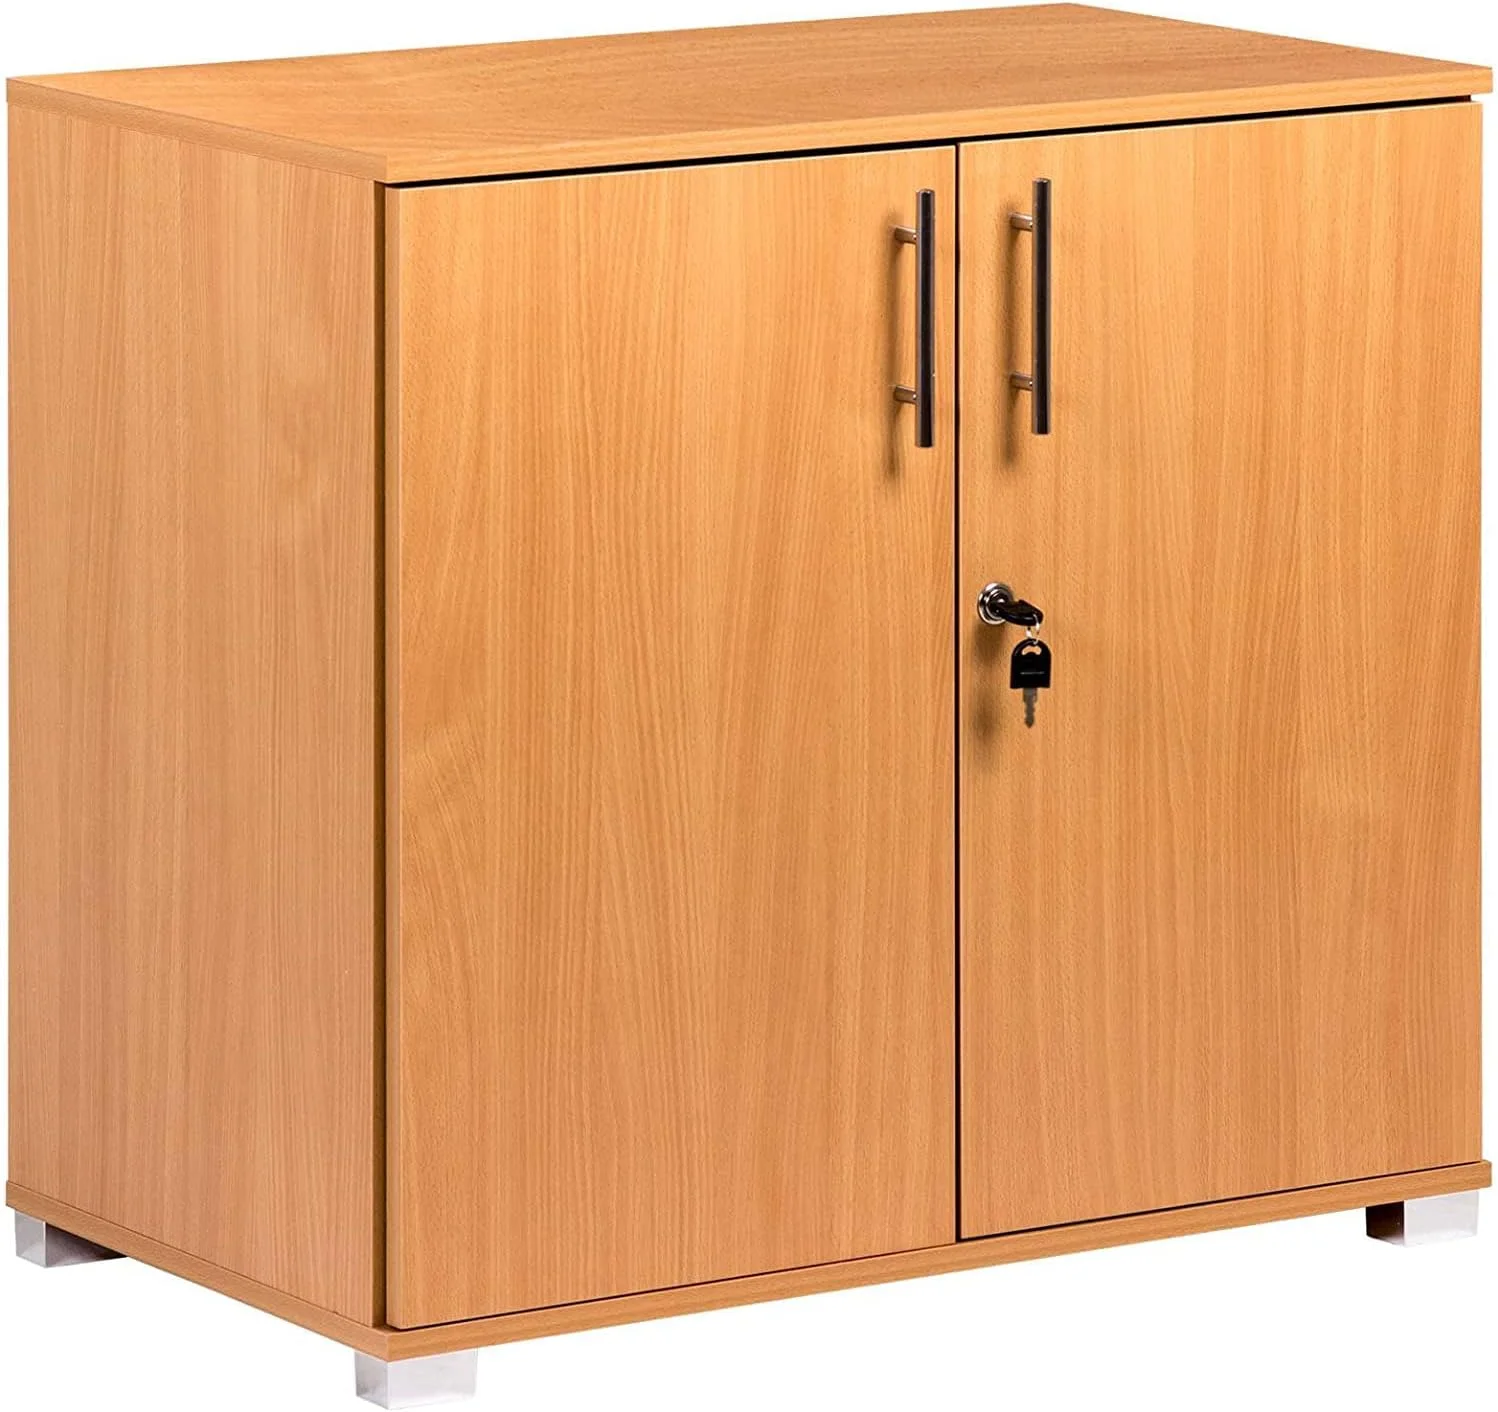 Factory Price Wooden Office Storage Cupboard Desk Height 2 Door Bookcase with Lock 75cm Tall Desktop Extension Height